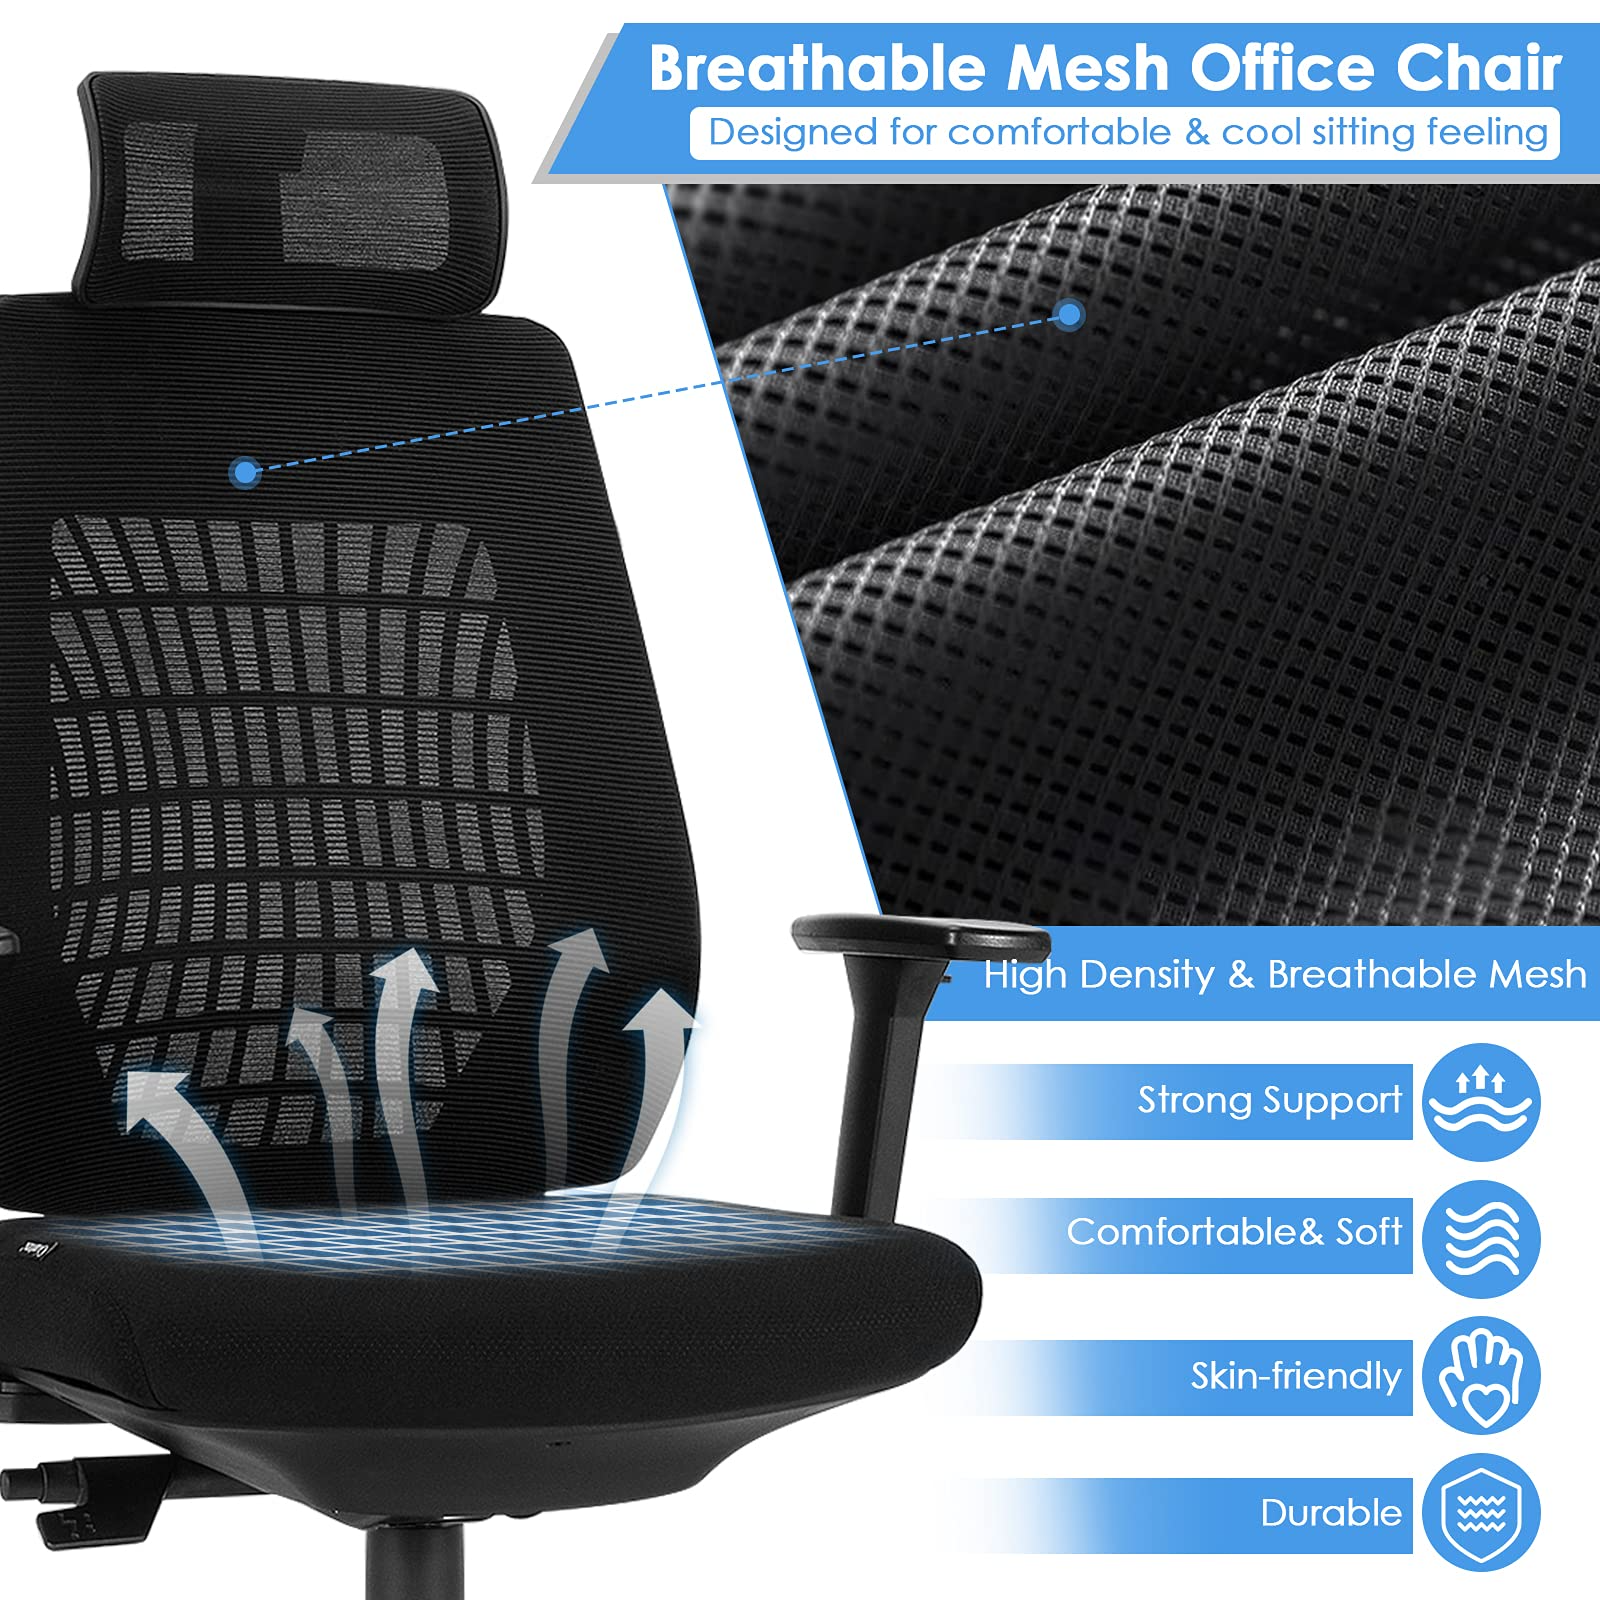 Giantex Reclining High Back Swivel Executive Chair w/ 3D Armrests